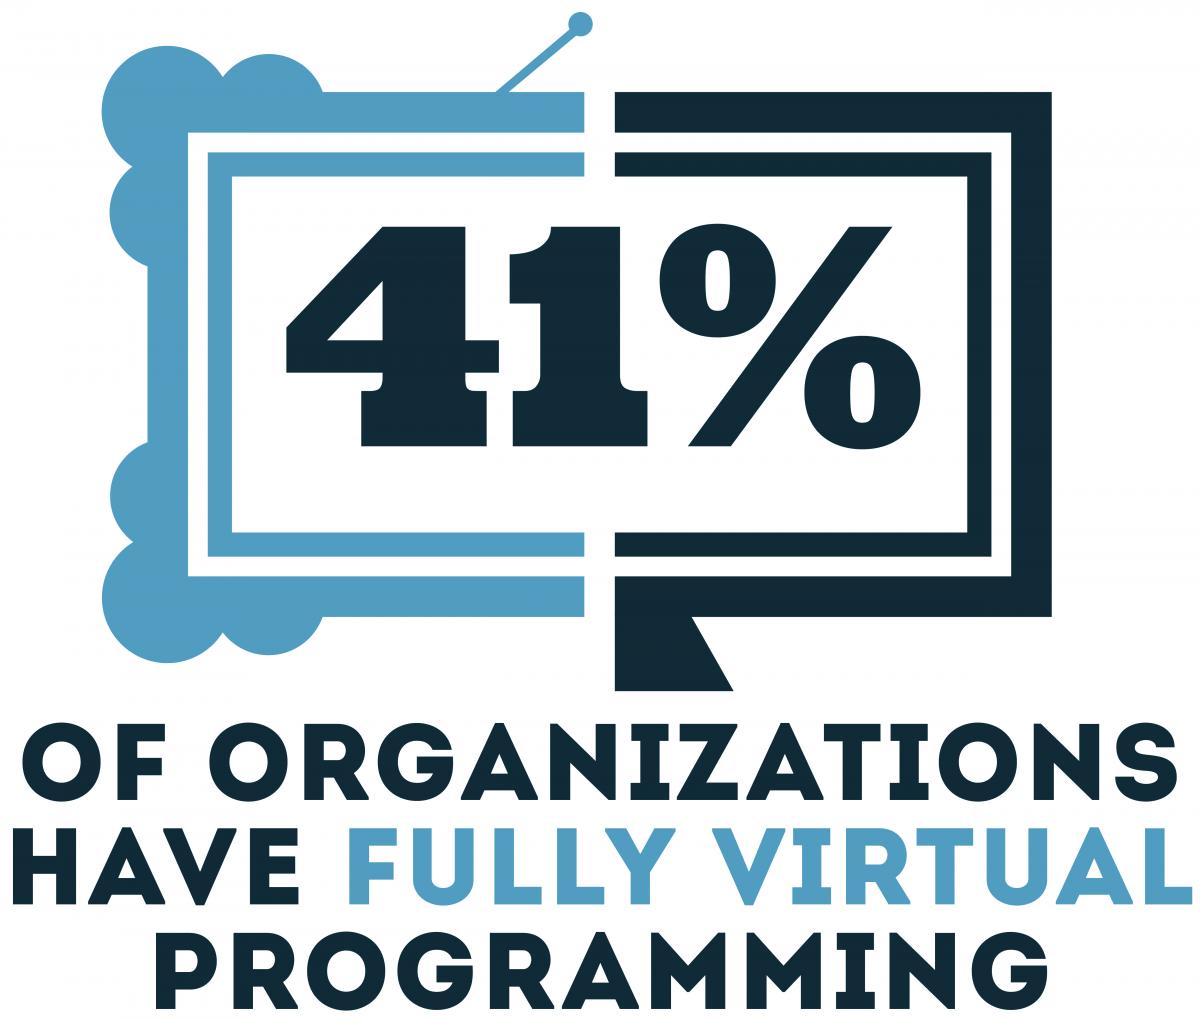 41% of organizations have full virtual programming